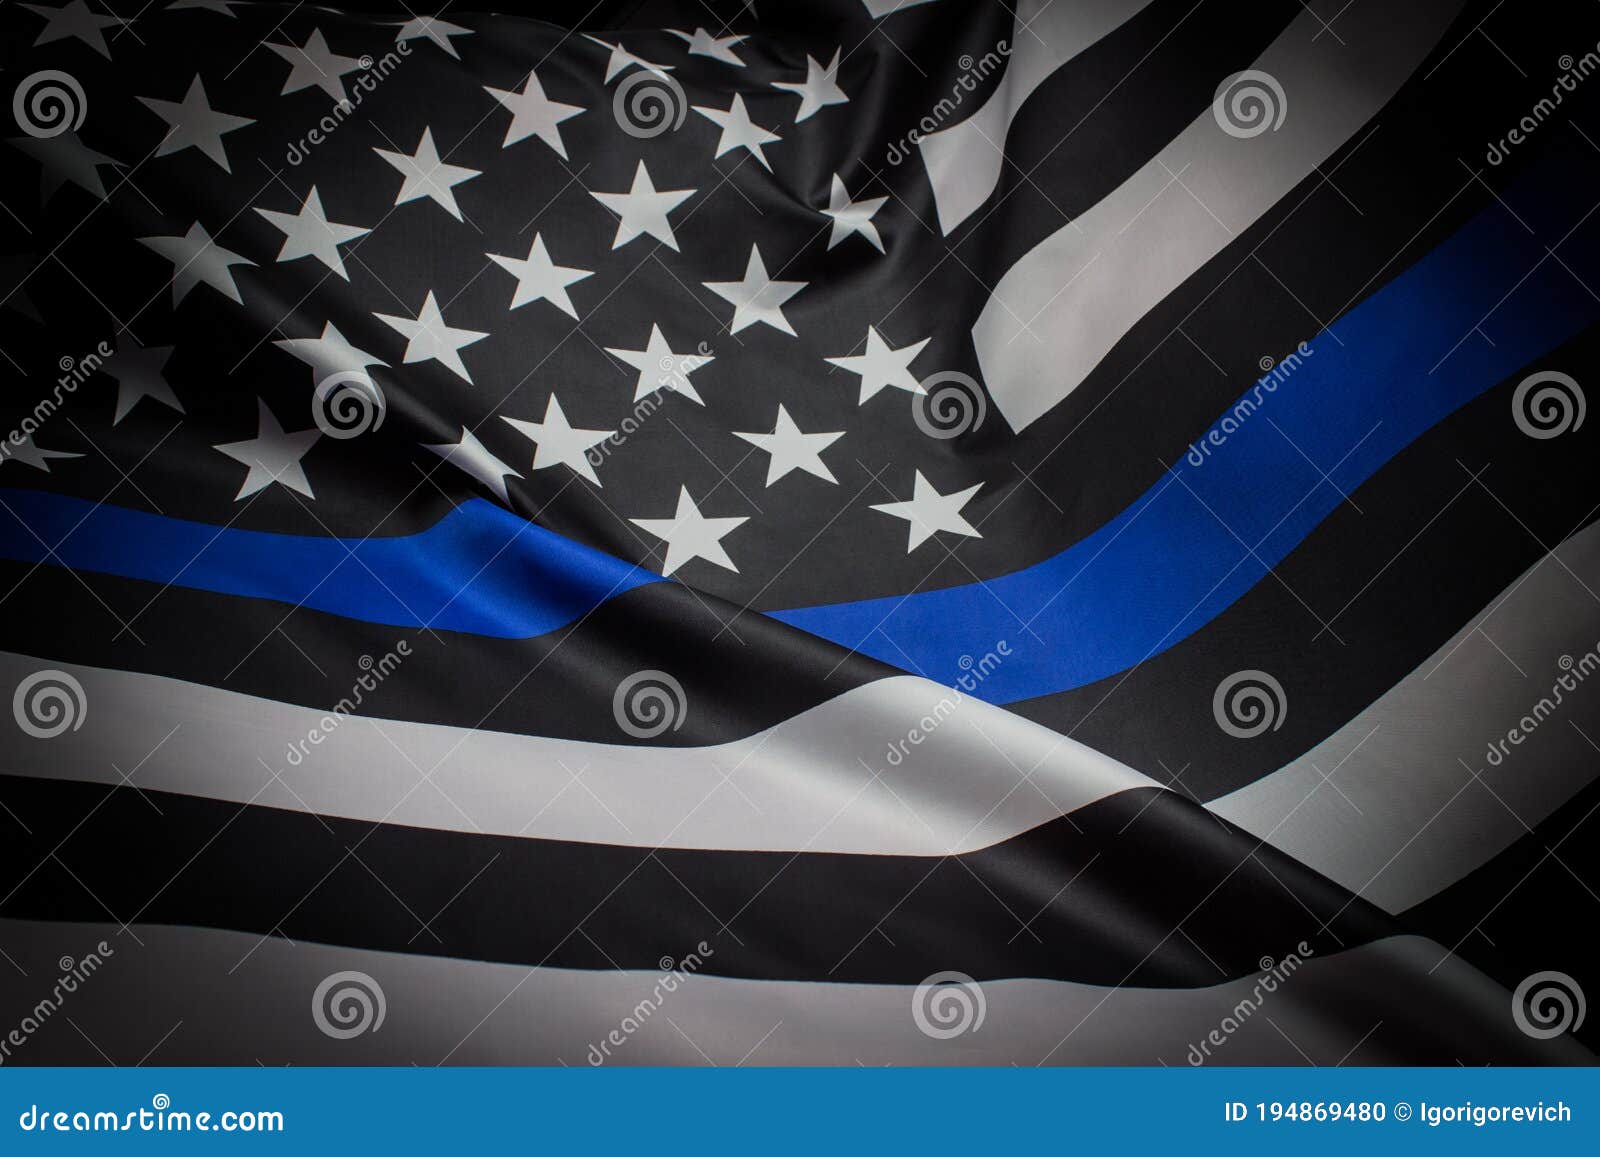 Law Enforcement American Lives Matter Thin Blue Line Flag US Flag USA Police 